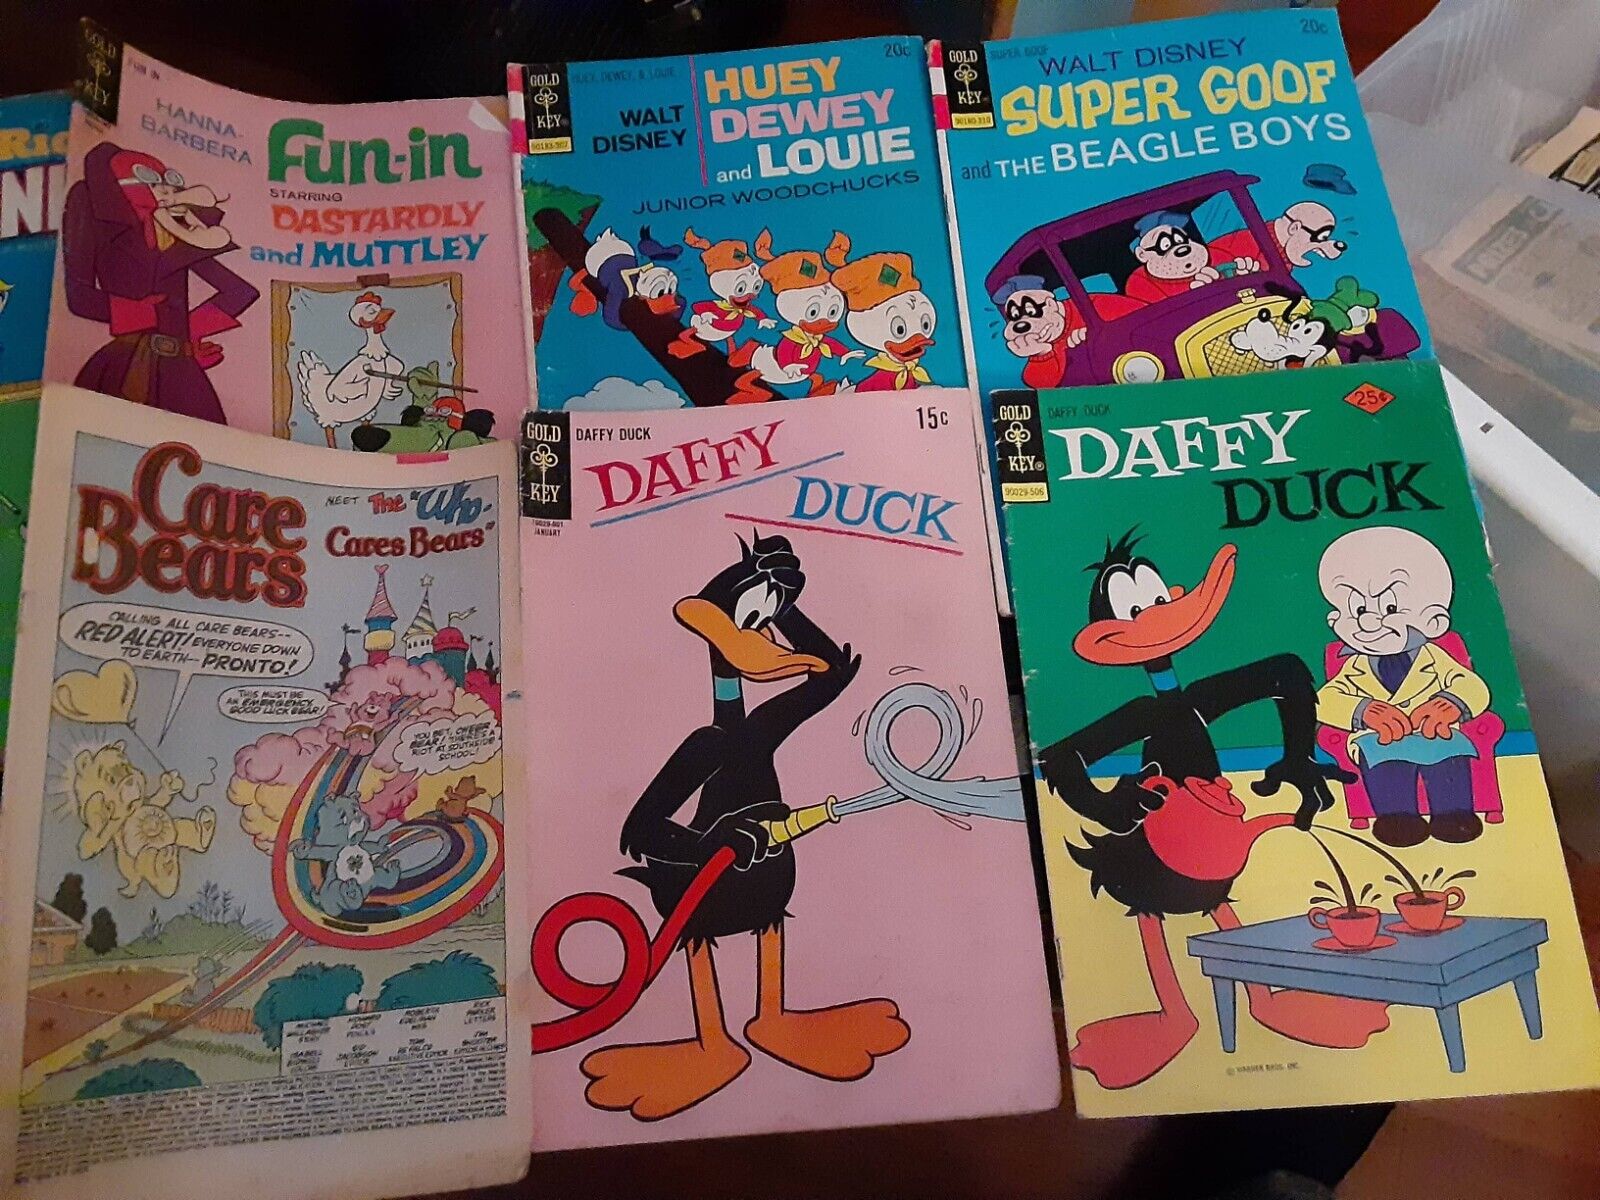 5 Gold Key Comics Lot: Daffy Duck, Super Goof, Huey Dewey and Louie + Care Bears